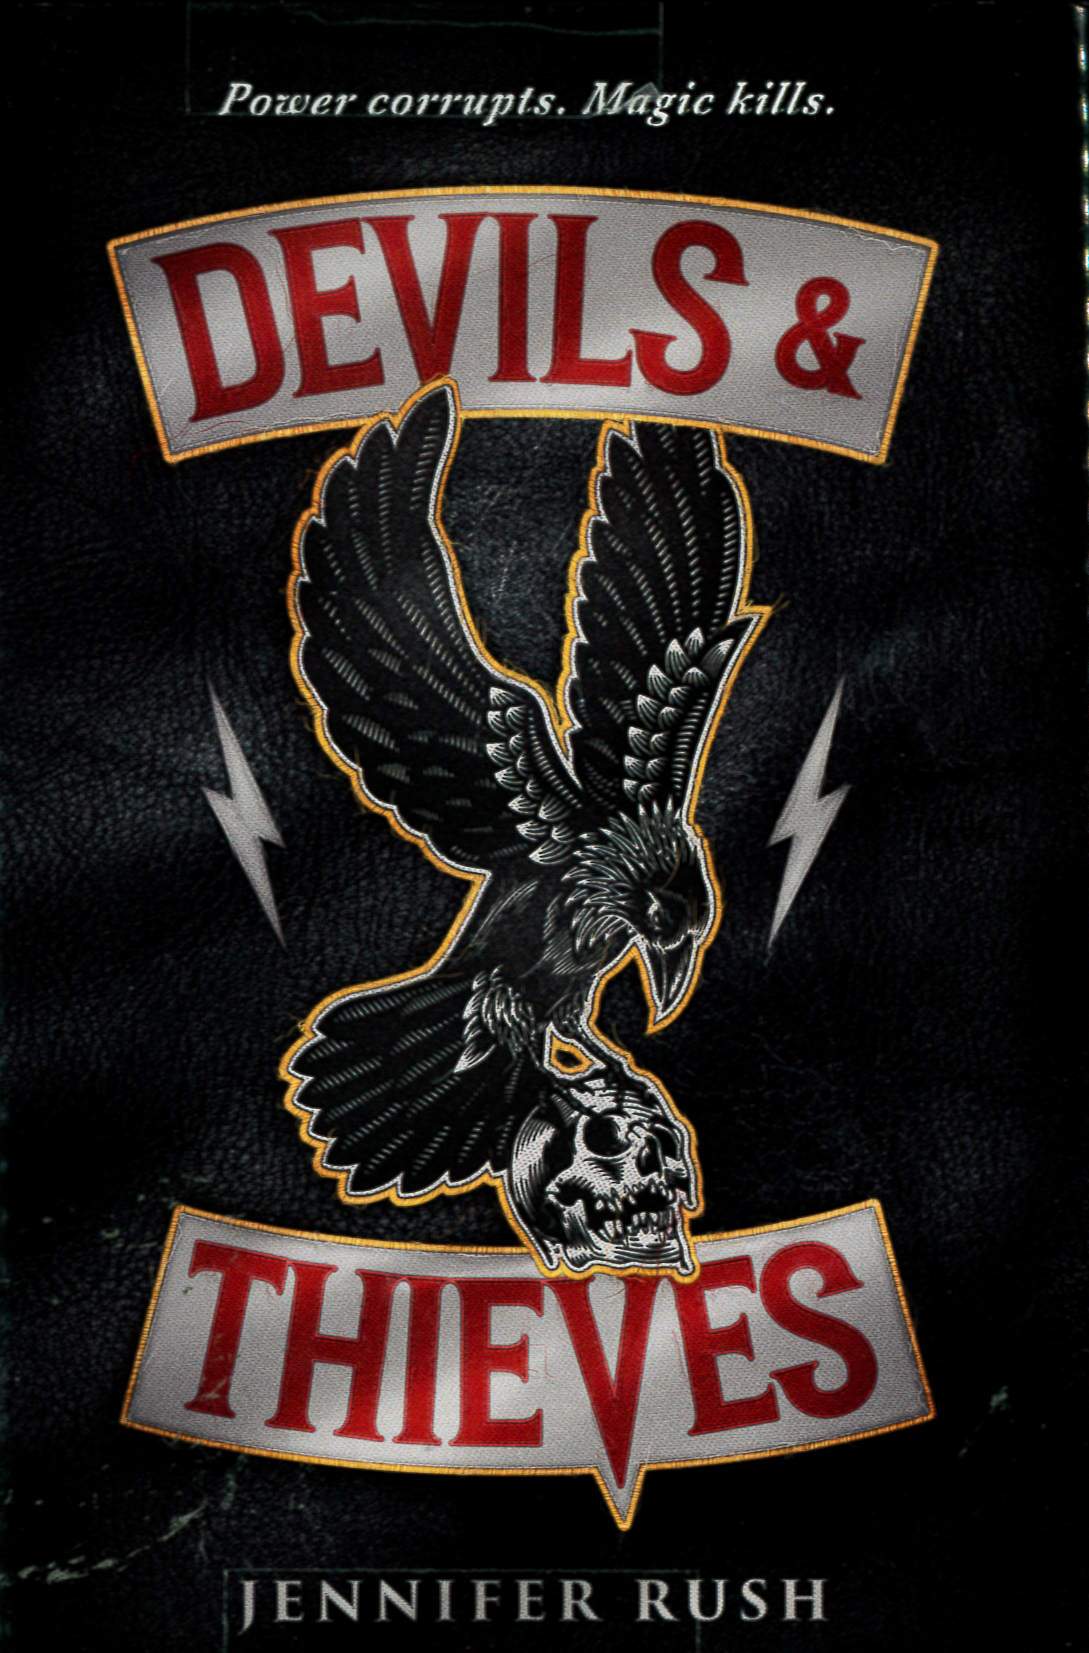 Devils & thieves /